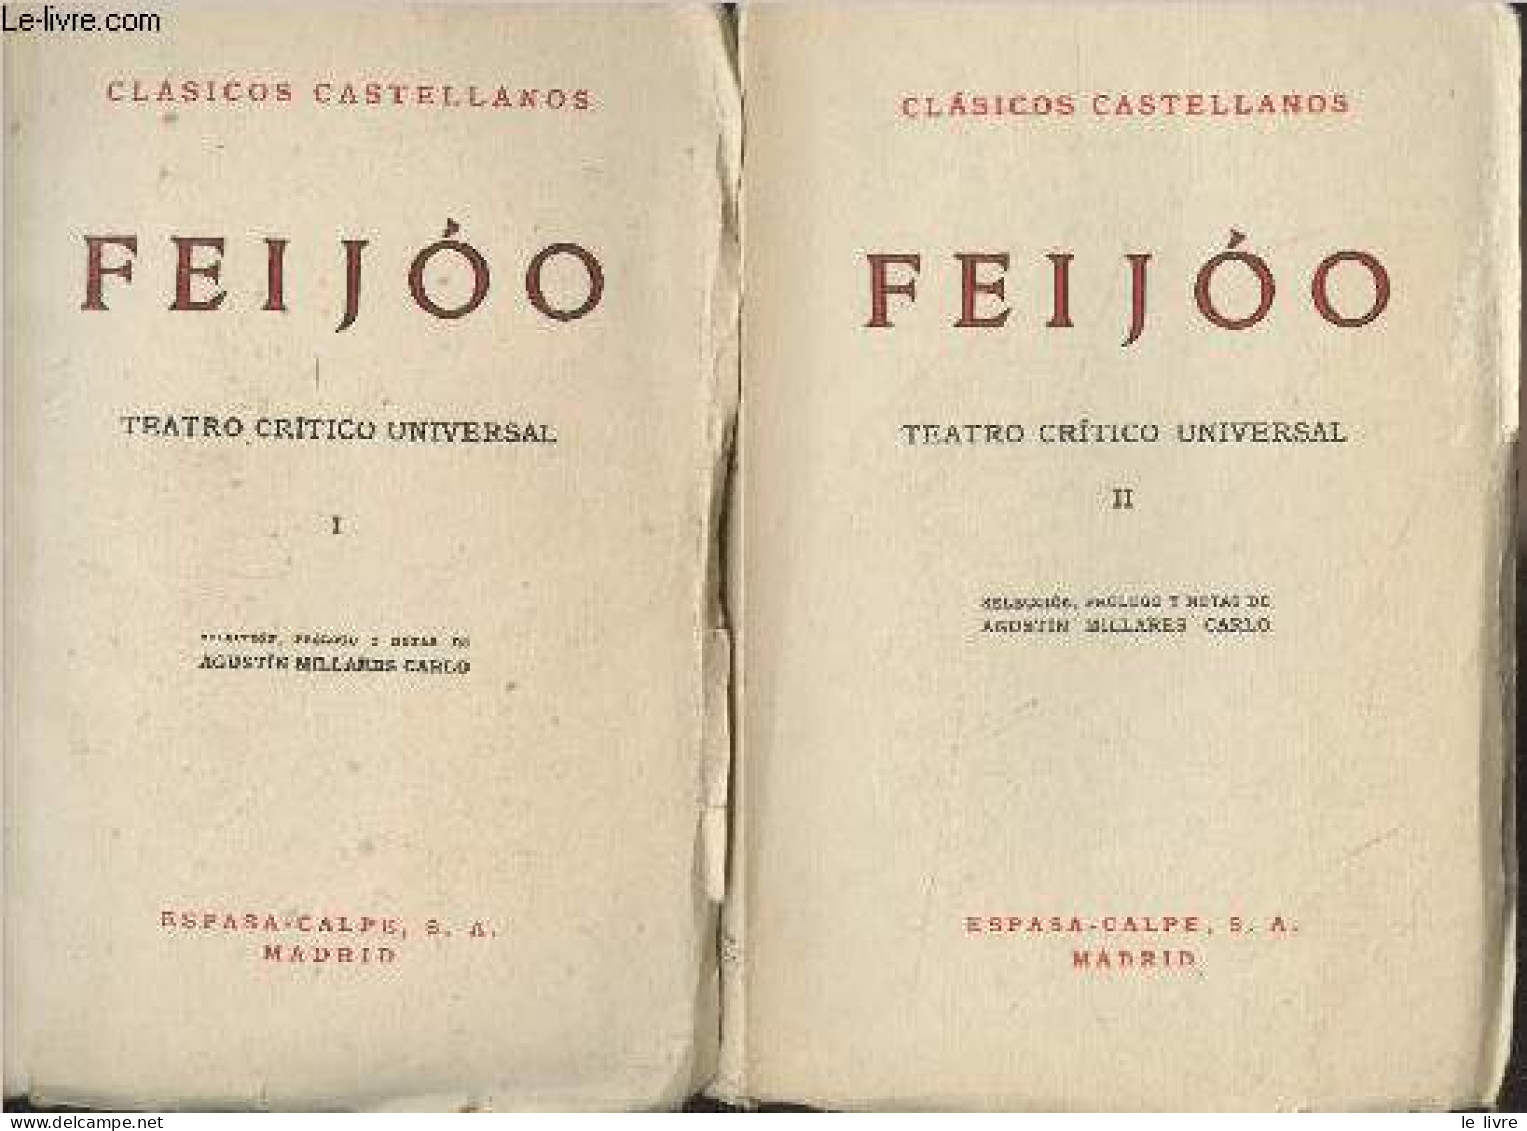 Teatro Critico Universal - III - "Clasicos Castellanos" N°48/53 - Feijoo - 1965 - Cultural